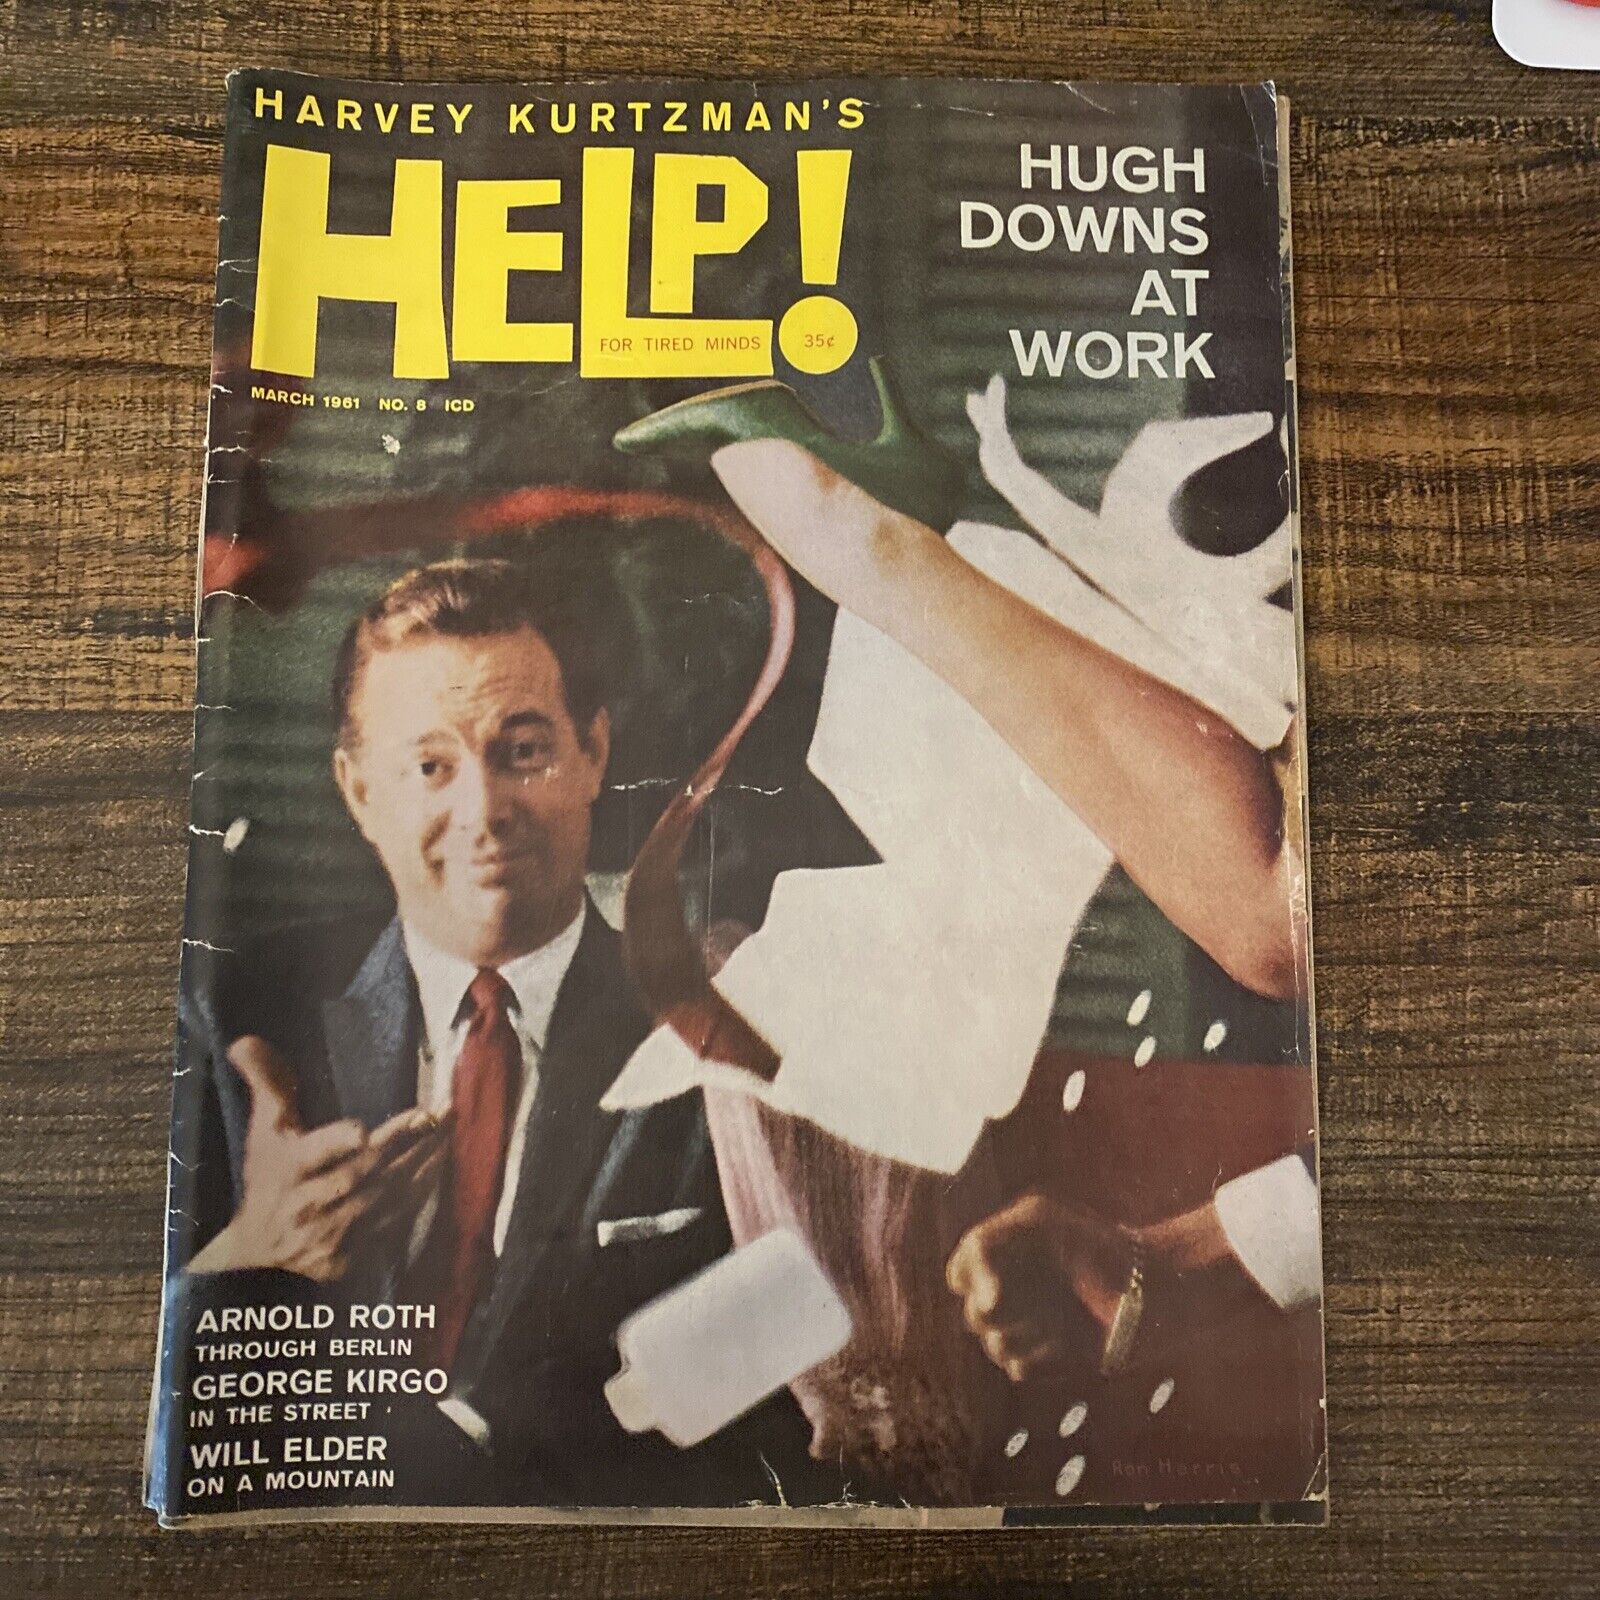 Help Magazine Vol. 1 #8 March 1961 Harvey Kurtzman